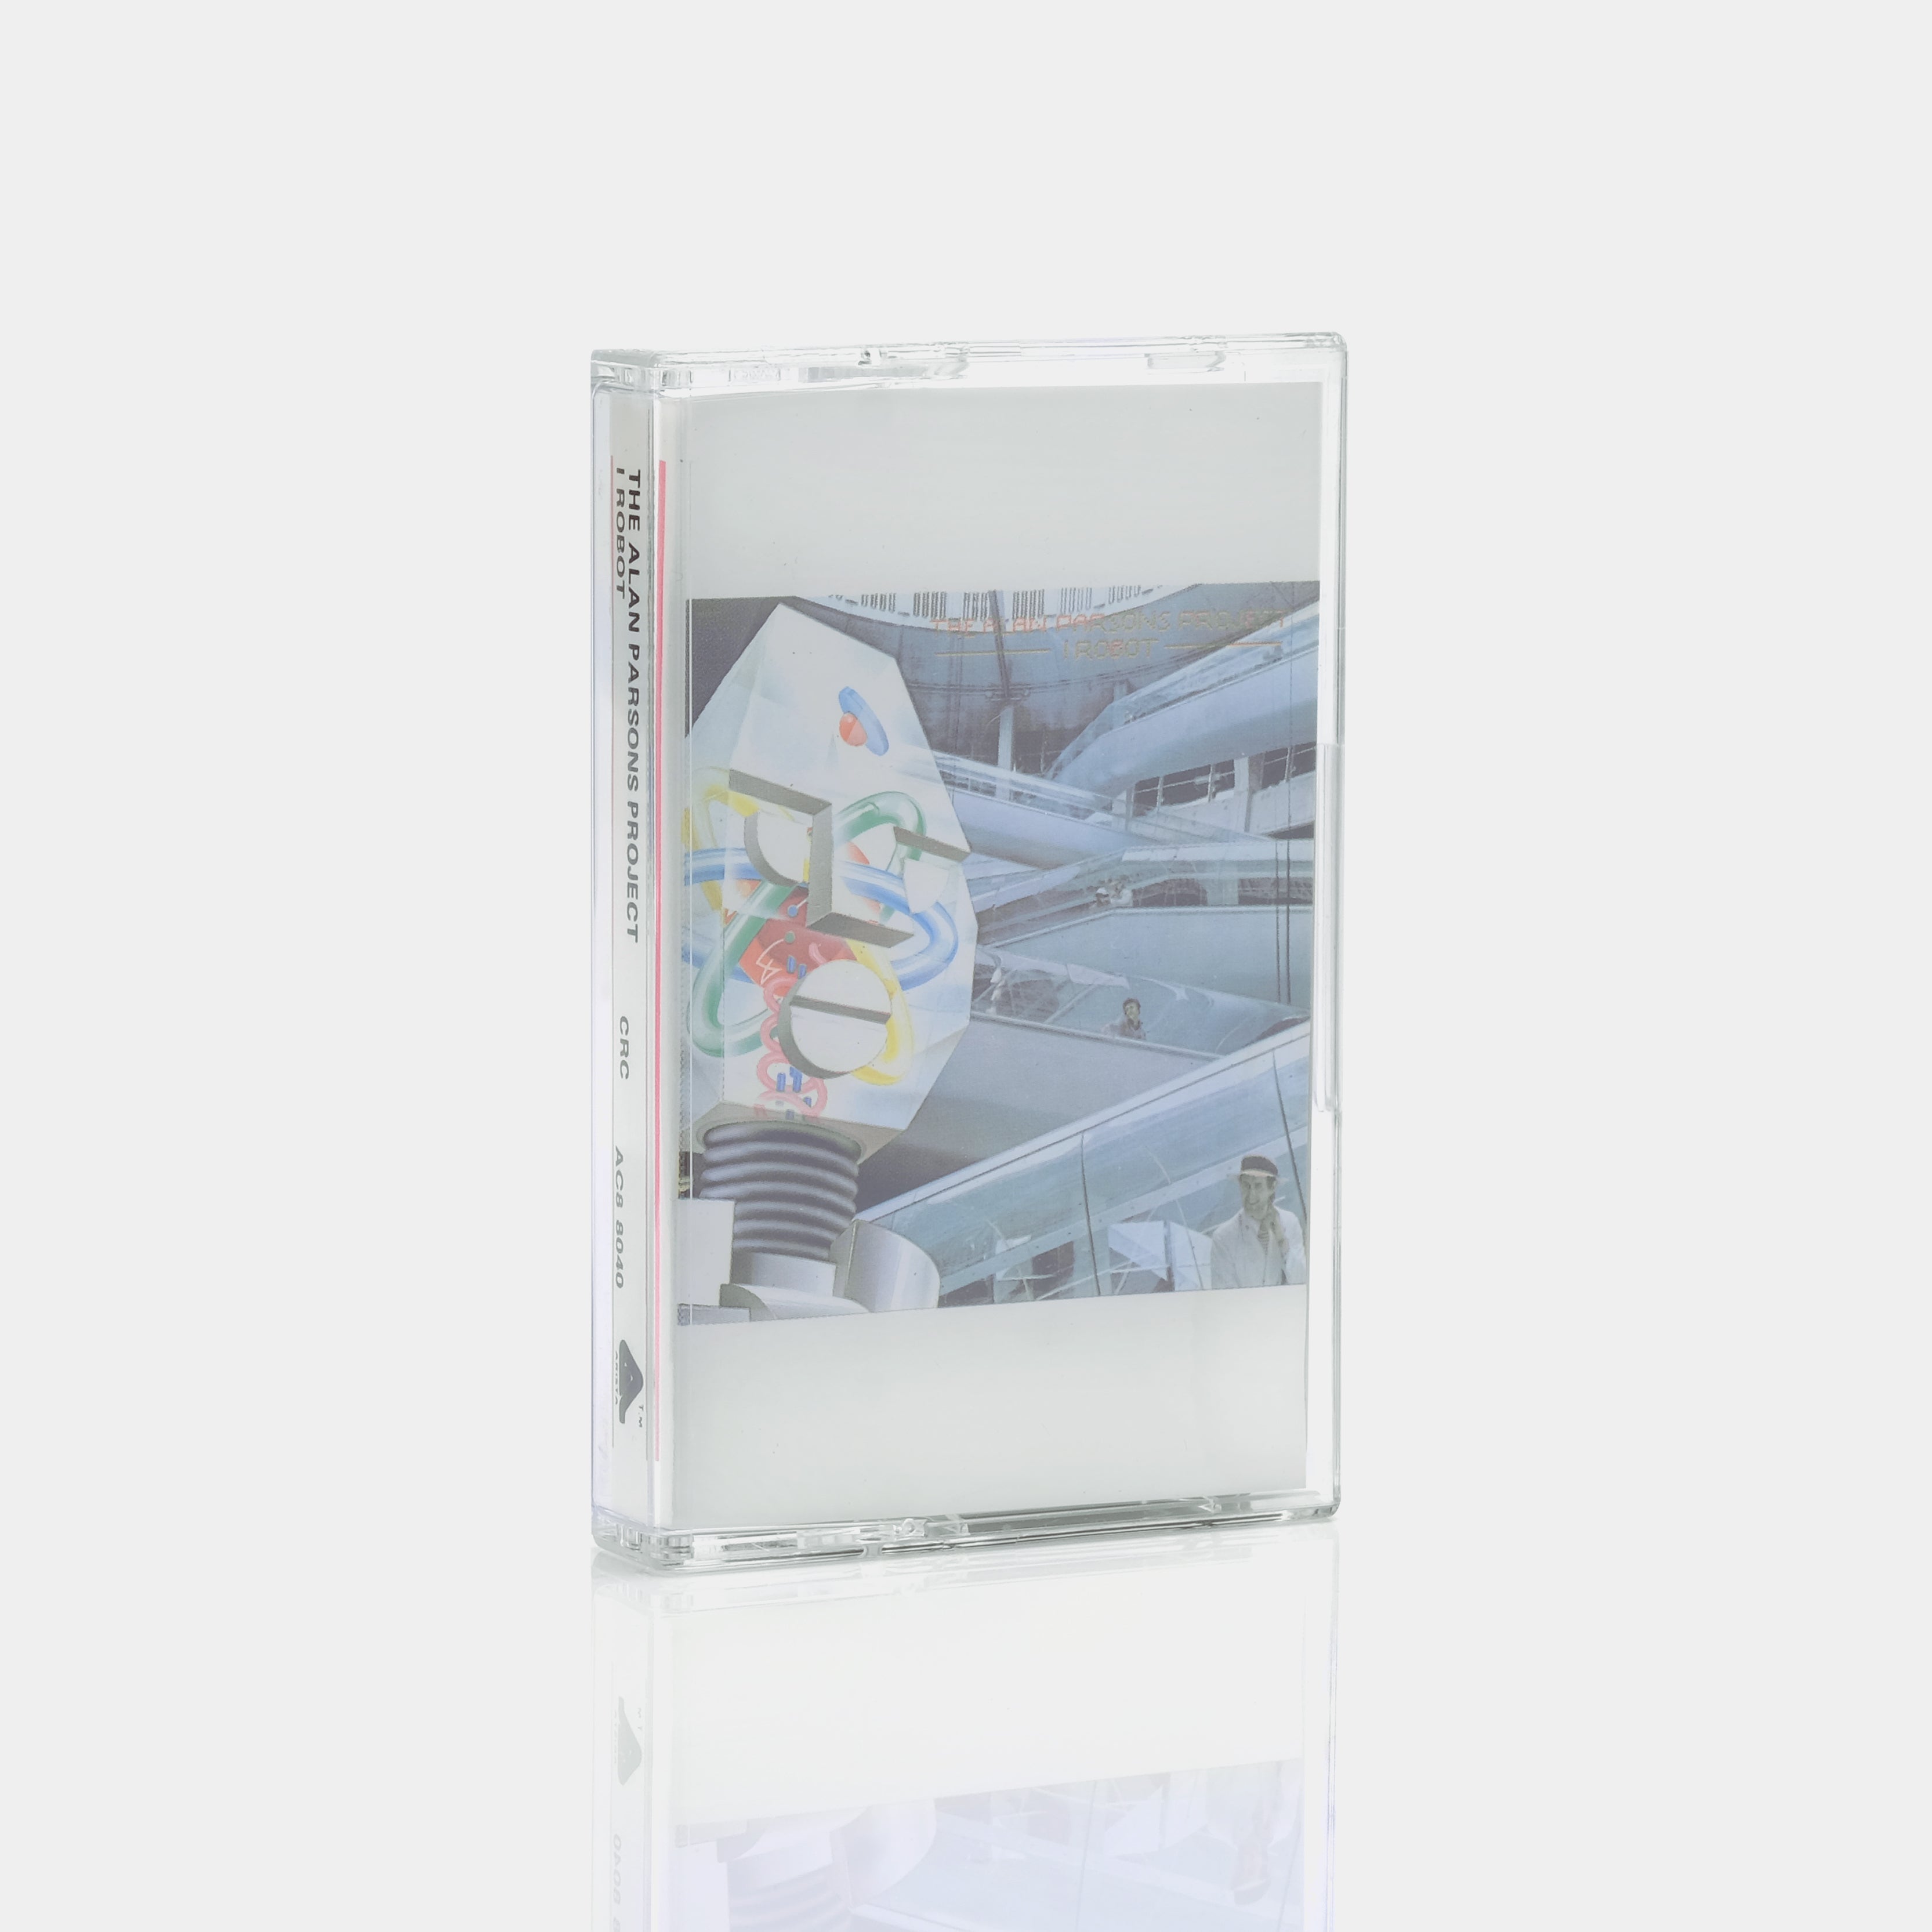 The Alan Parsons Project - I Robot Cassette Tape